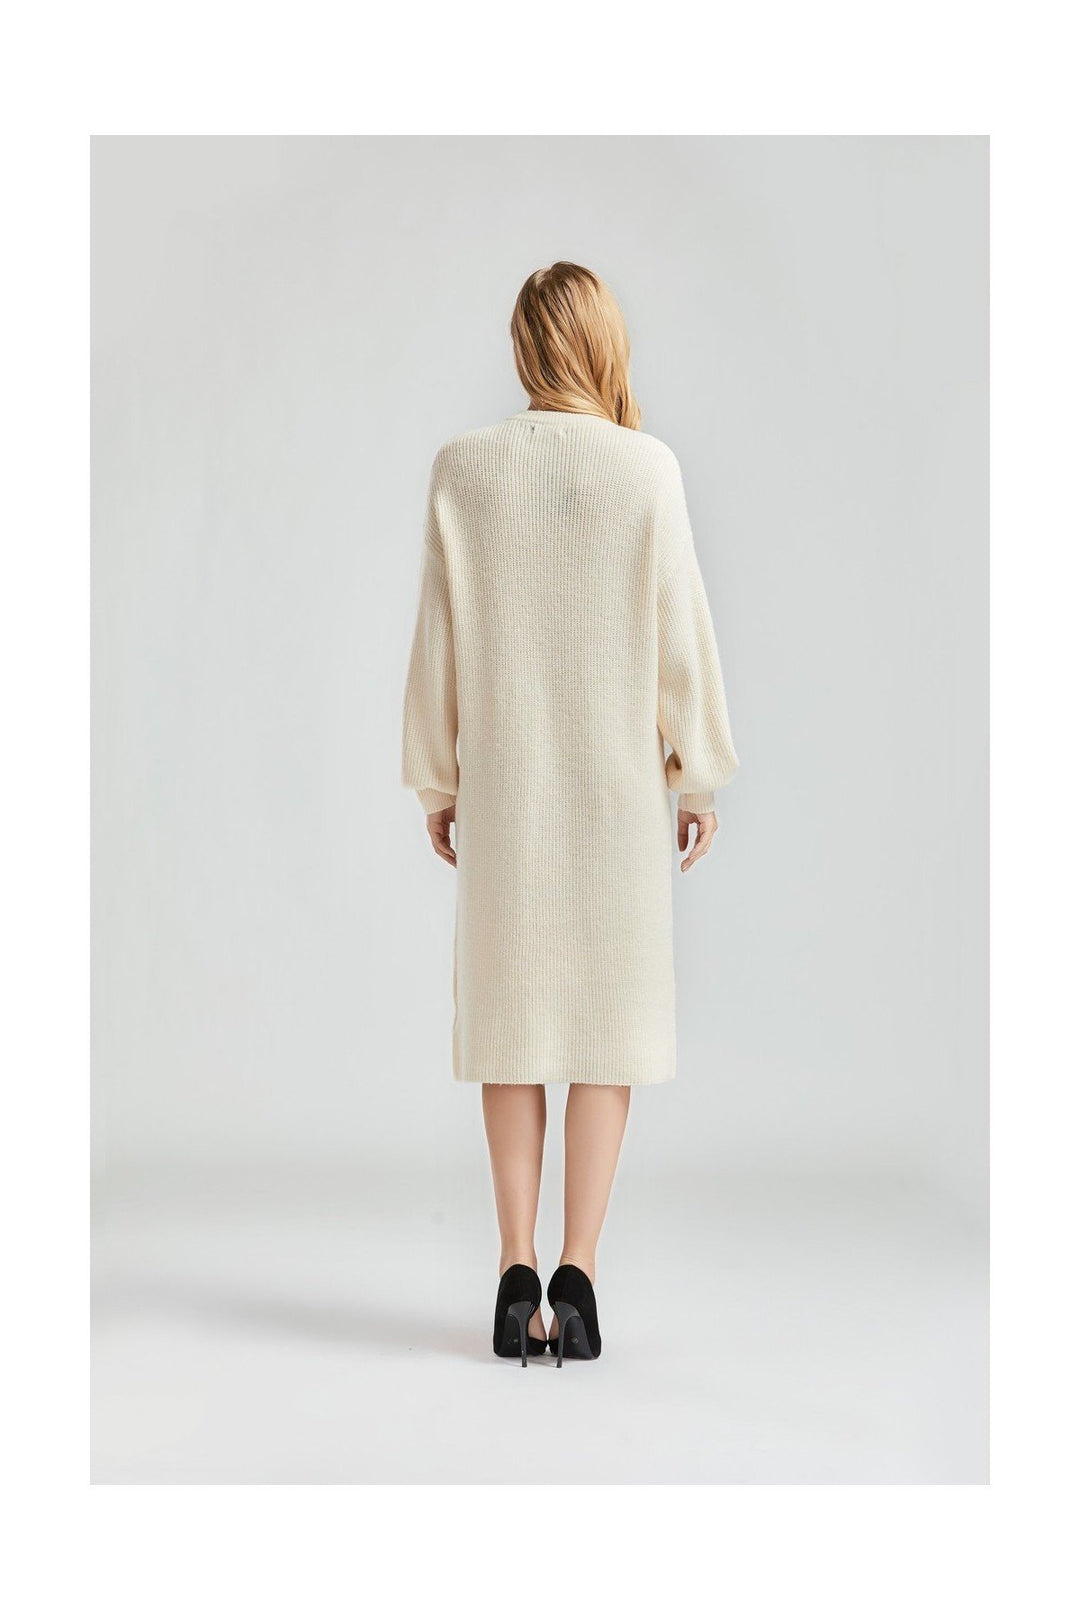 Beige Long Sleeve Sweater Midi Dress - Back View